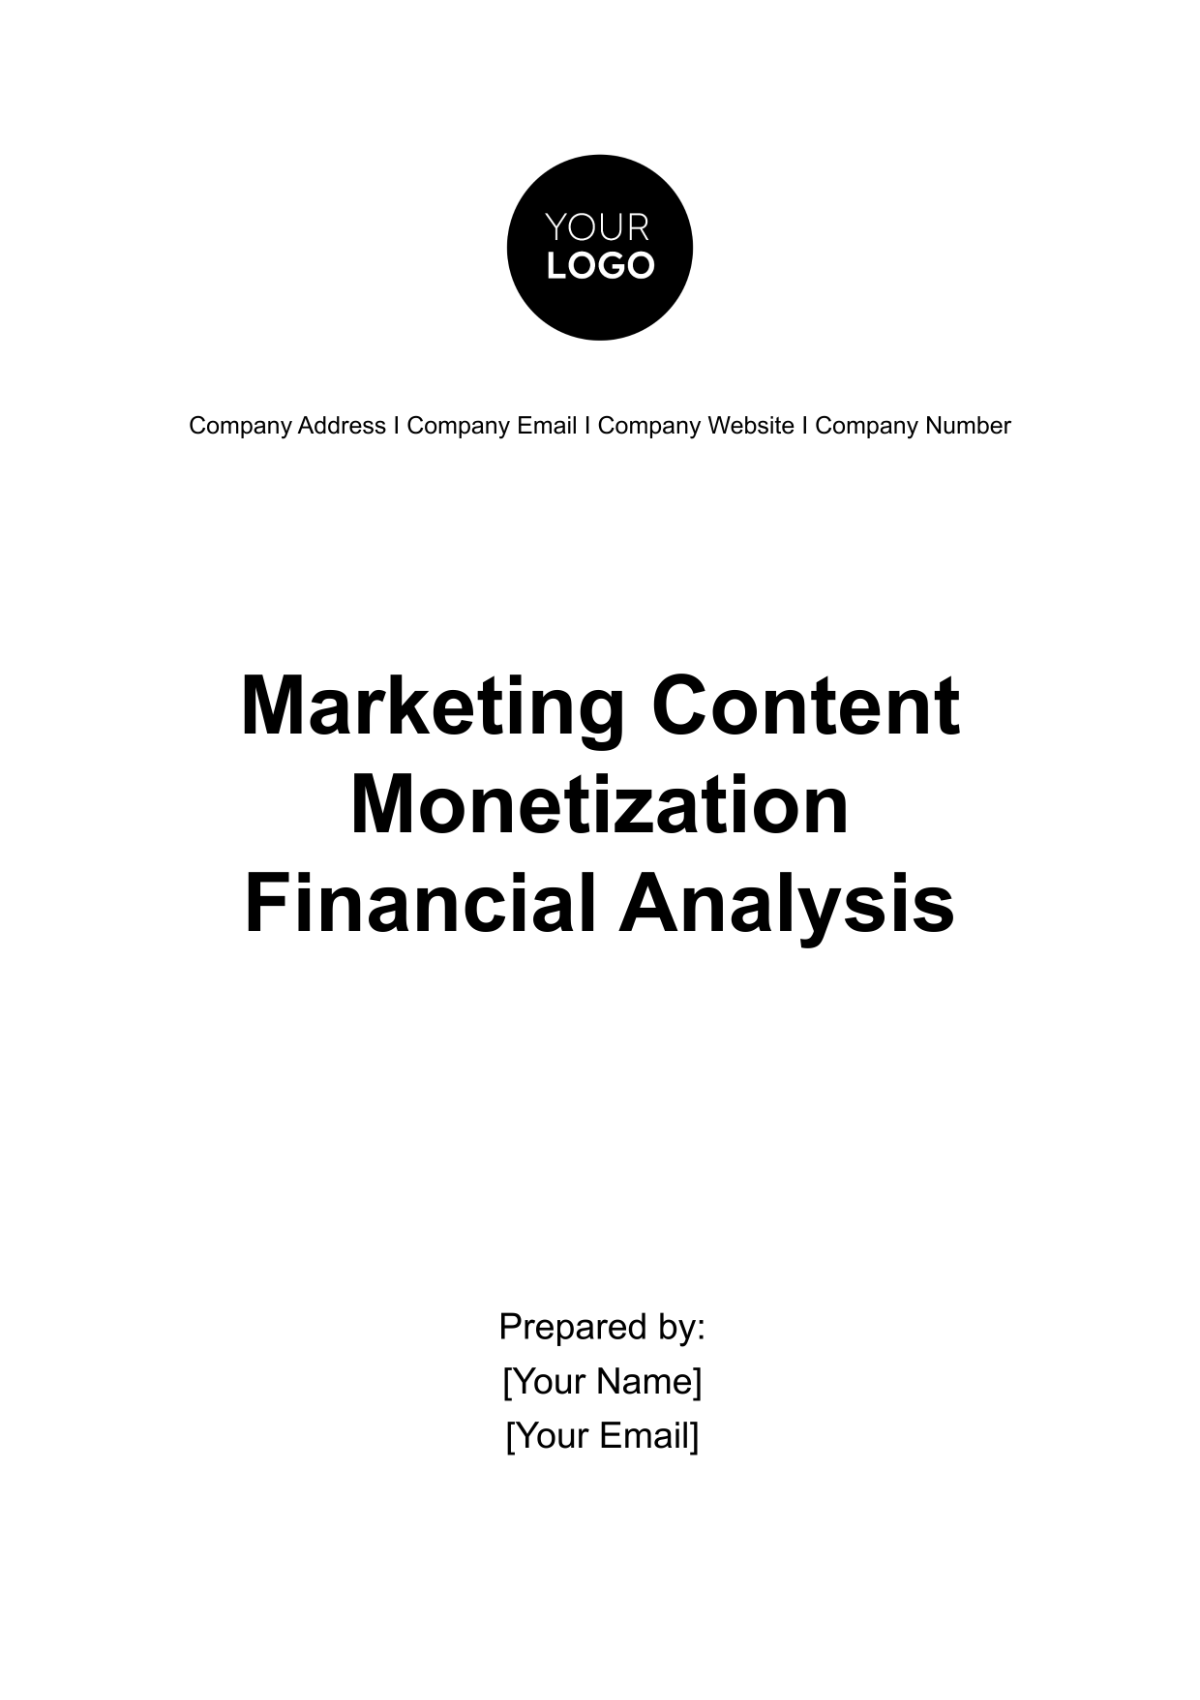 Marketing Content Monetization Financial Analysis Template